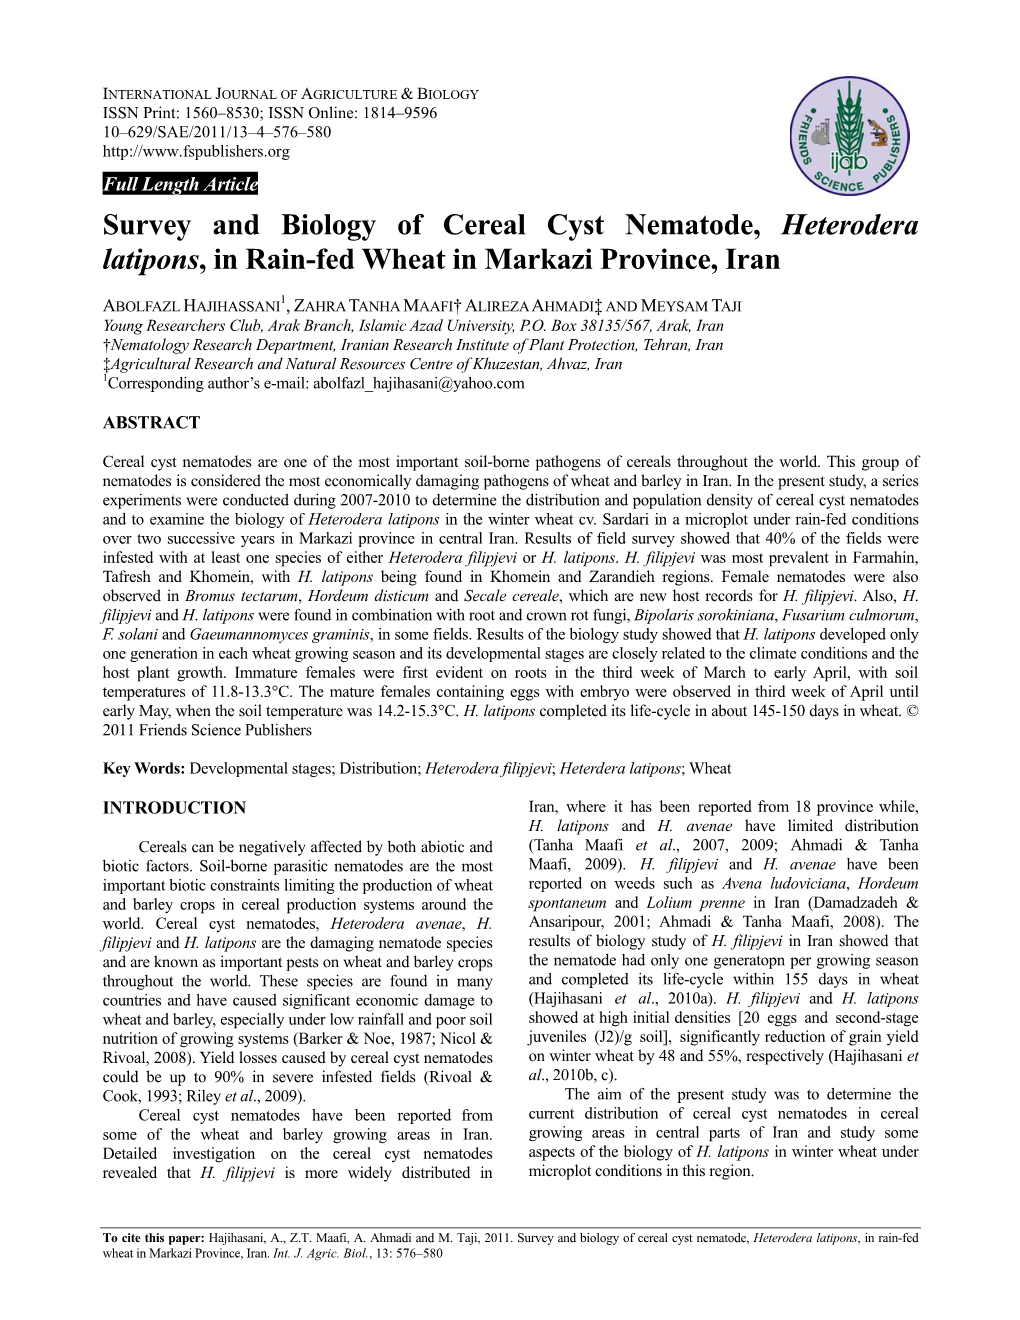 Survey and Biology of Cereal Cyst Nematode, Heterodera Latipons, in Rain-Fed Wheat in Markazi Province, Iran